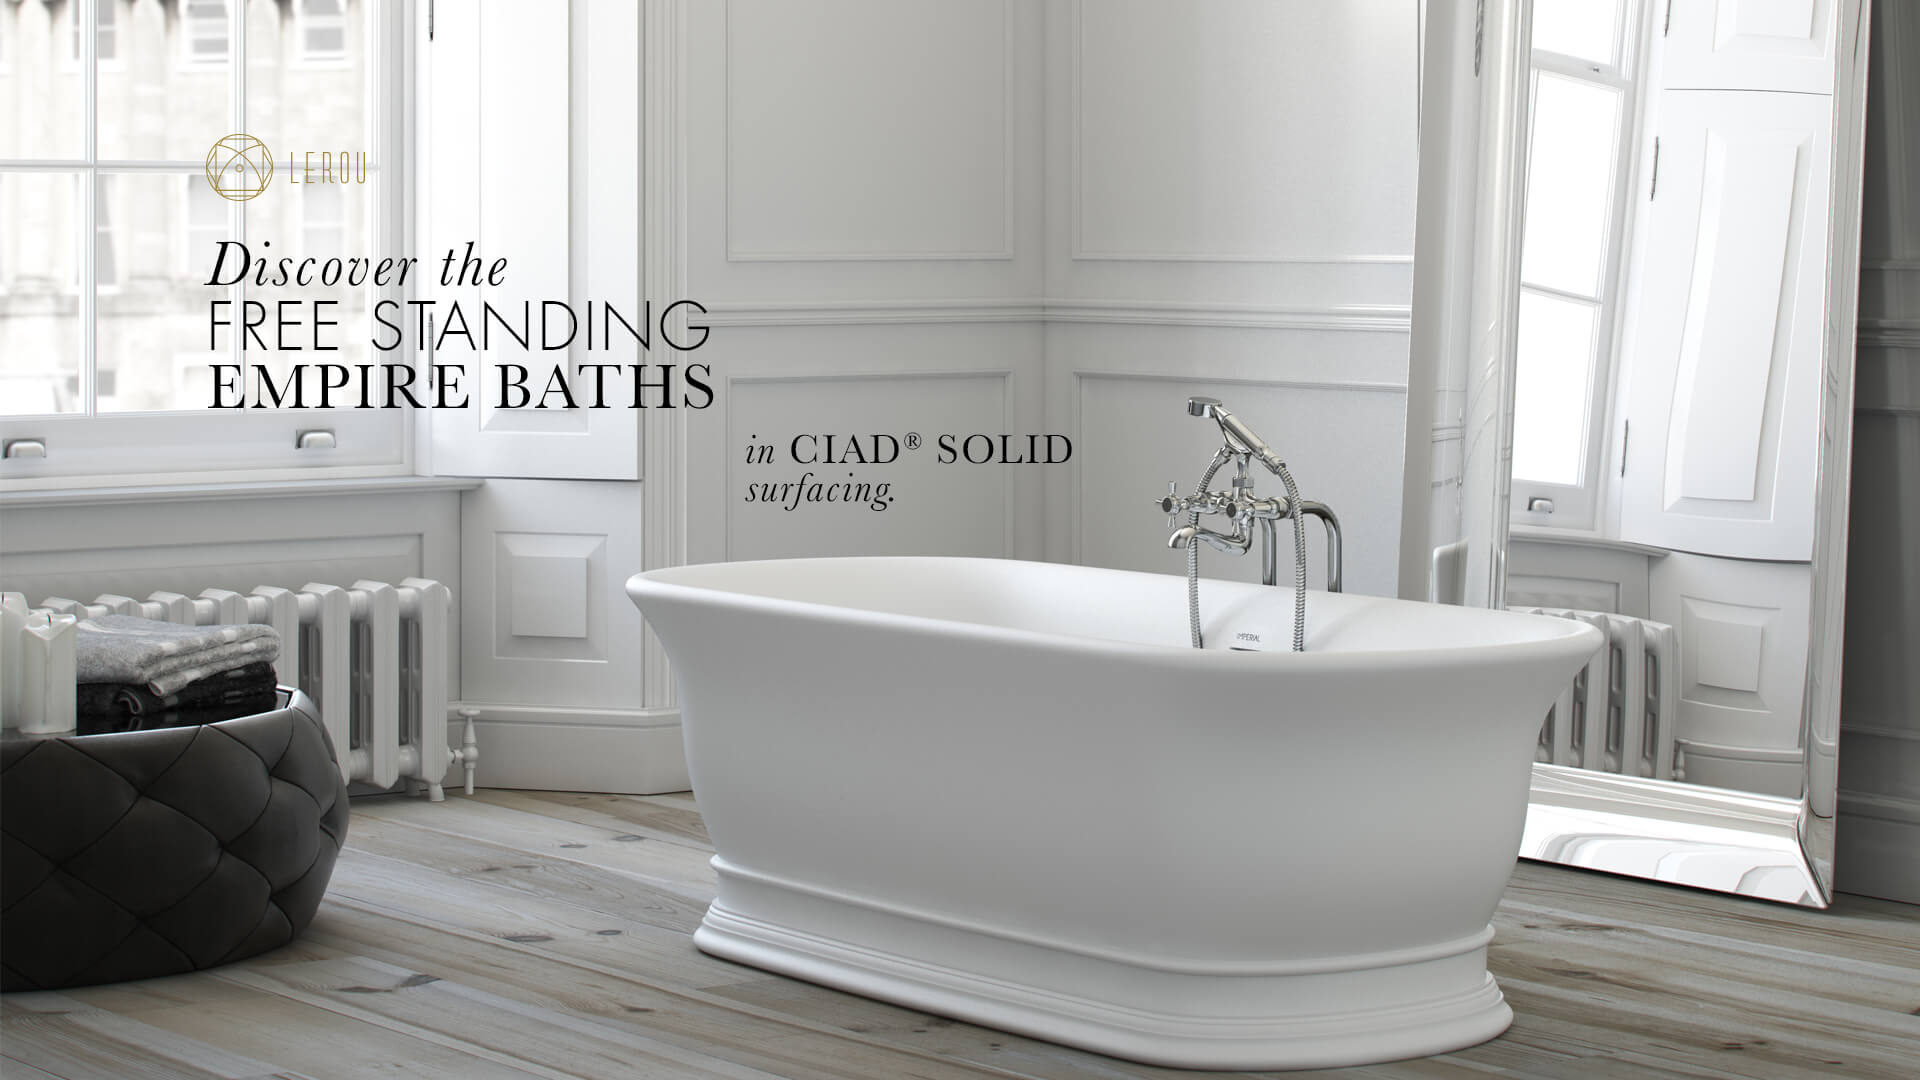 Lerou Free Standing Empire Baths in CIAD® Solid Surfacing. Lerou vrijstaande Empire baden in CIAD® Solid oppervlakte.